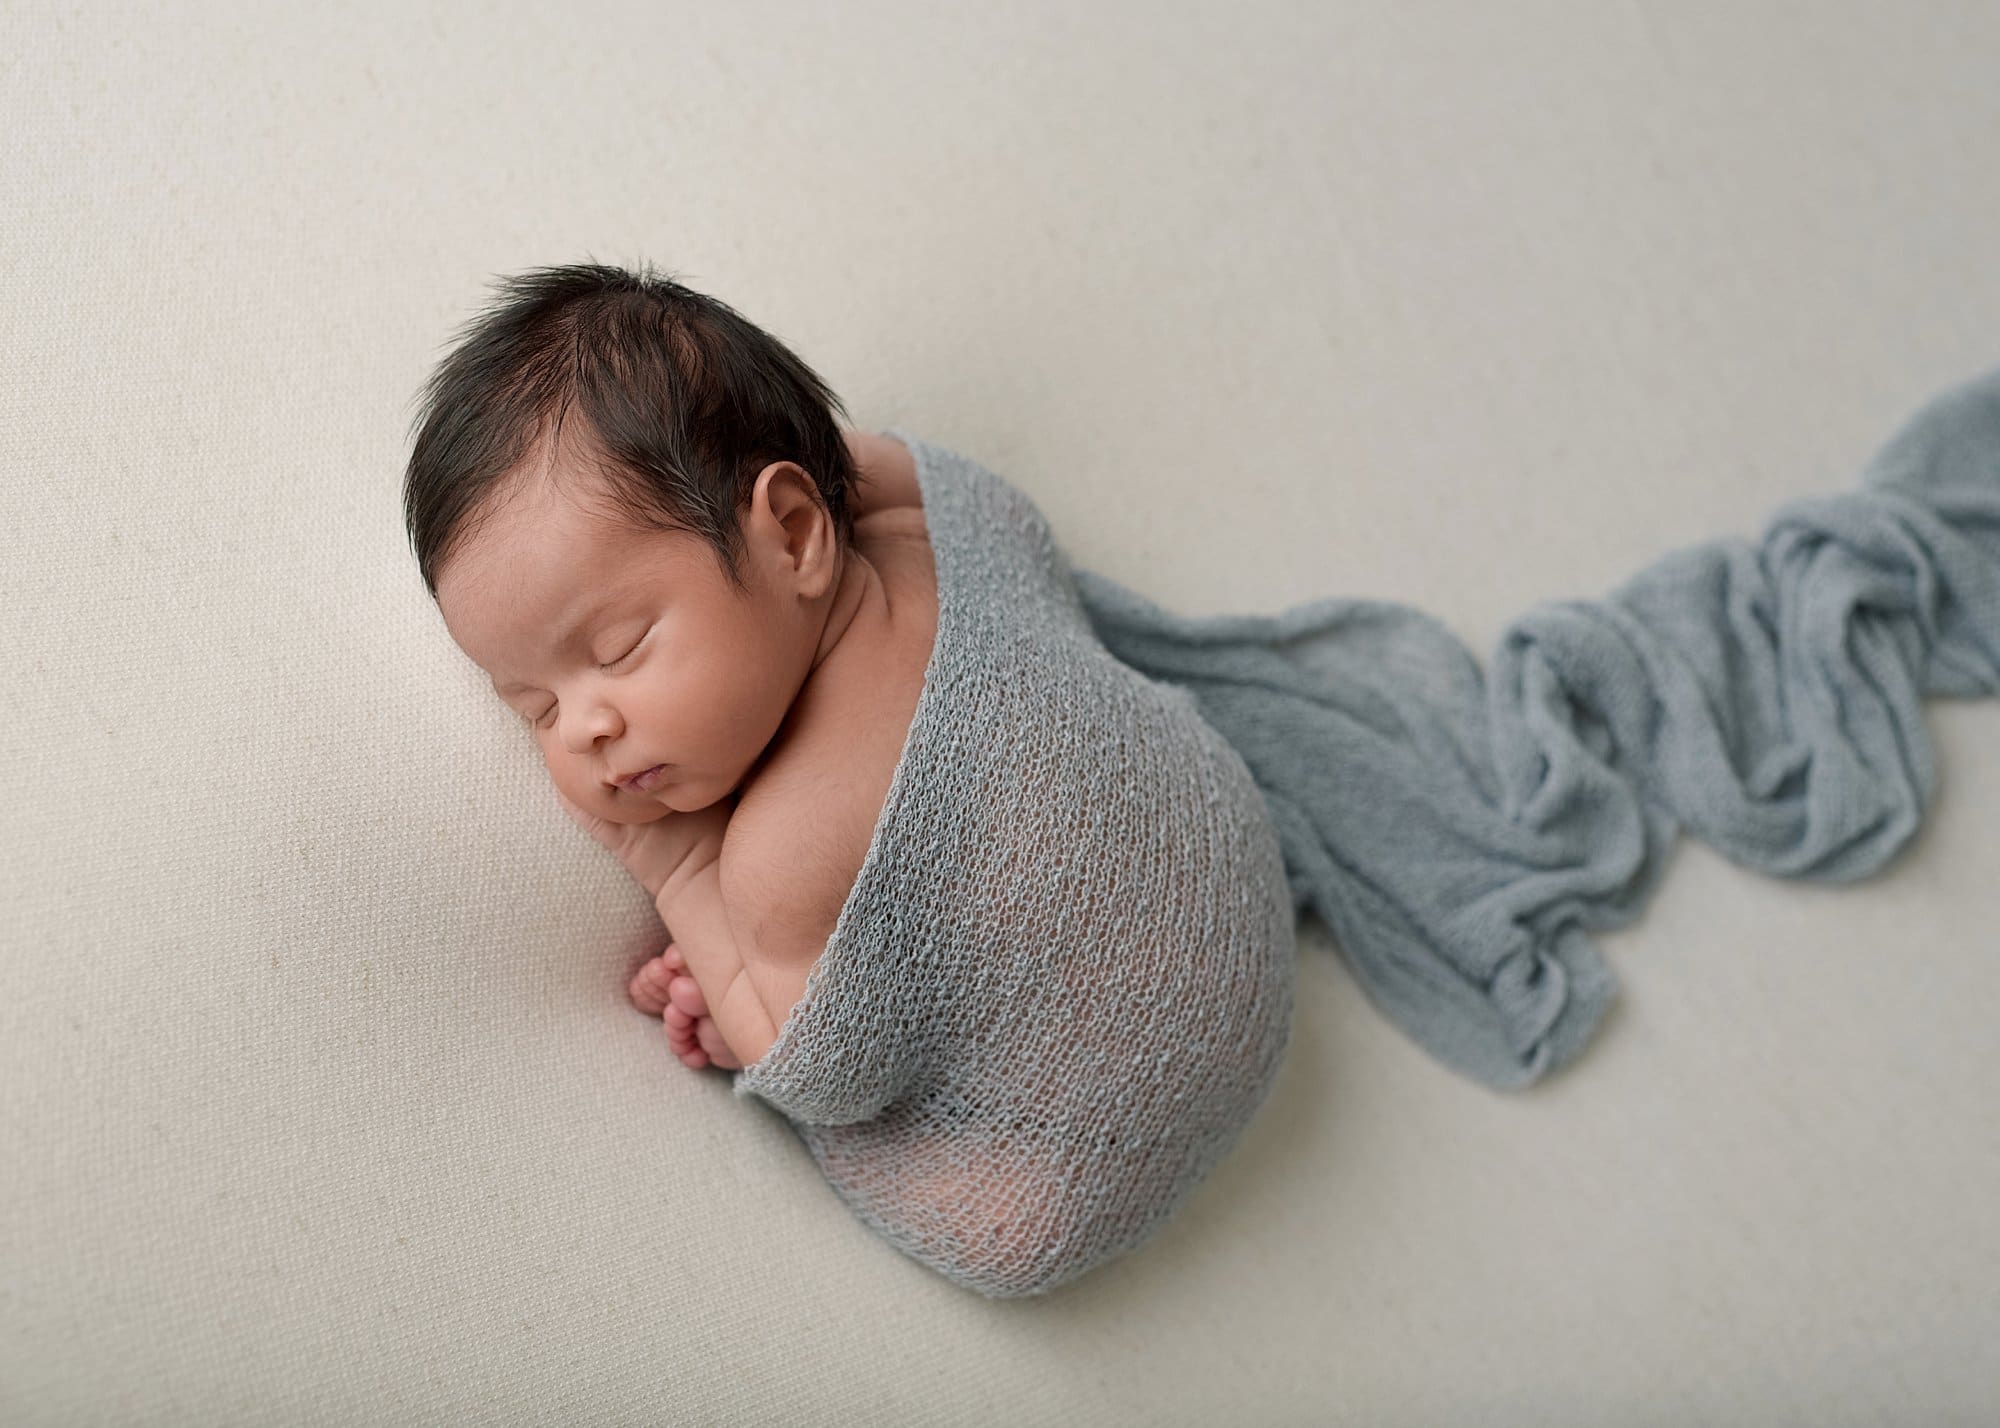 LA lakers newborn baby sleeping on jersey Los Angeles photographer